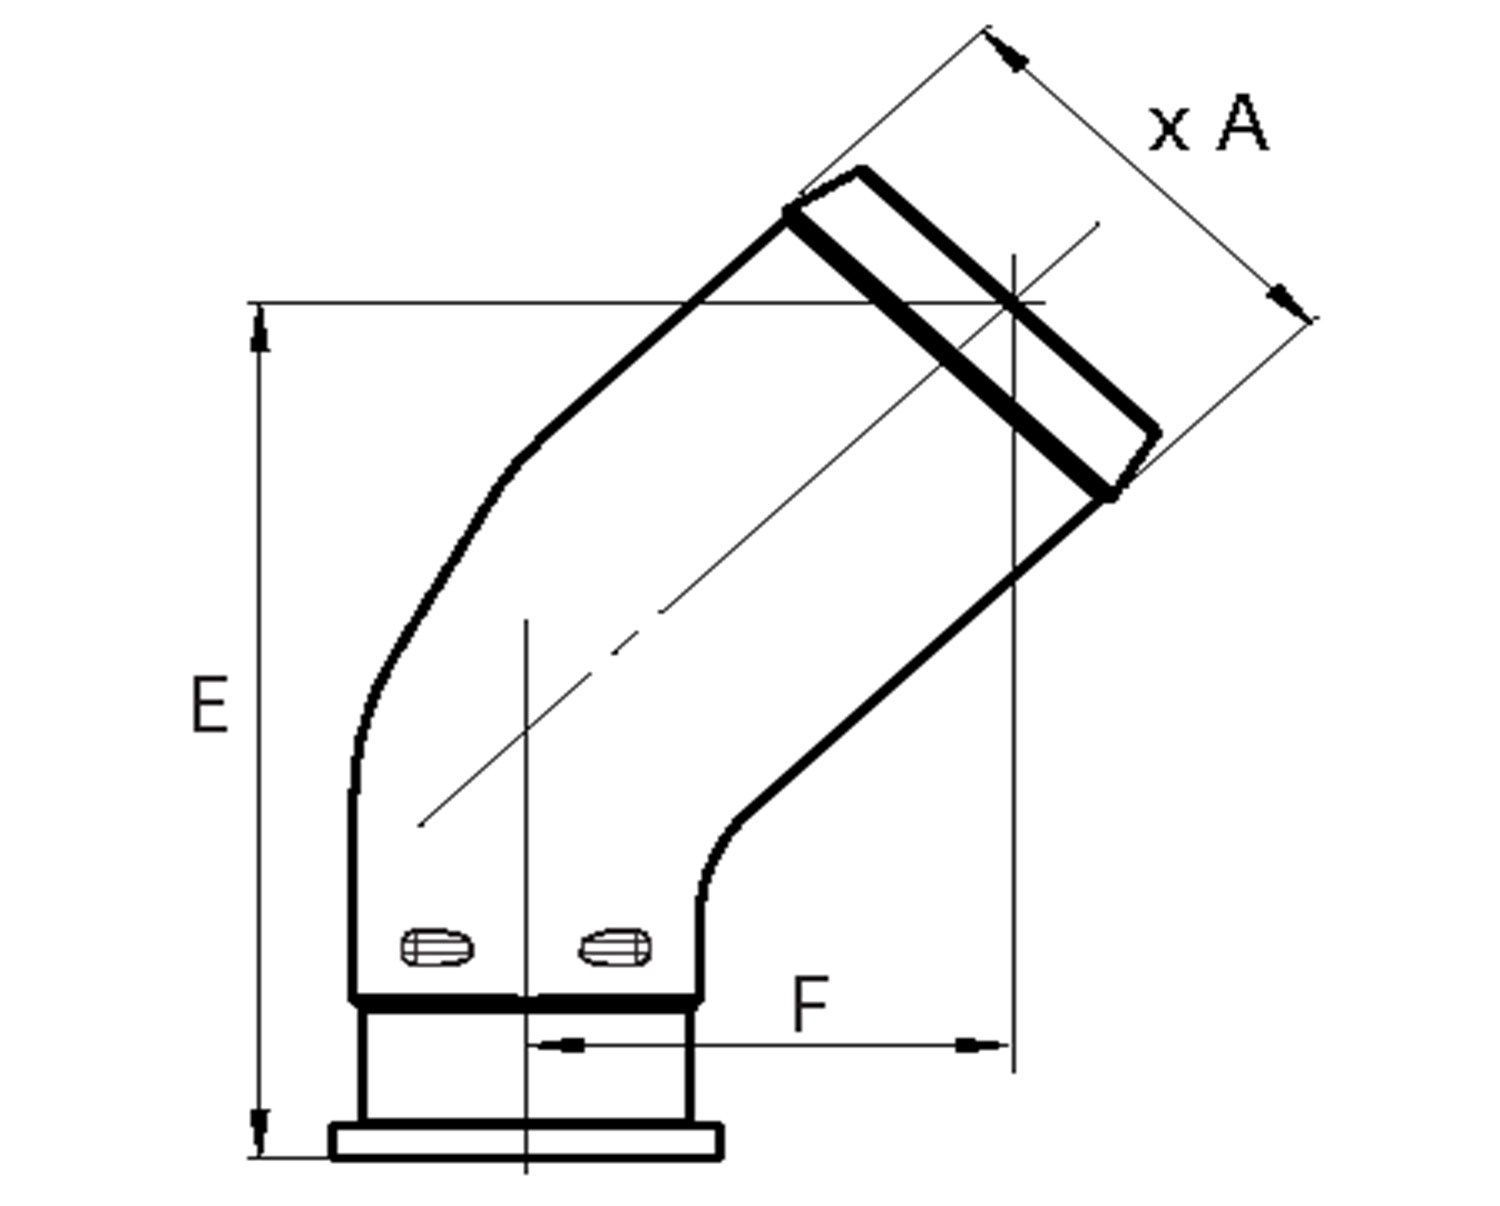 Ansaugstutzen 45° für XPi XAi Pumpen von Hydro-Leduc, Skizze